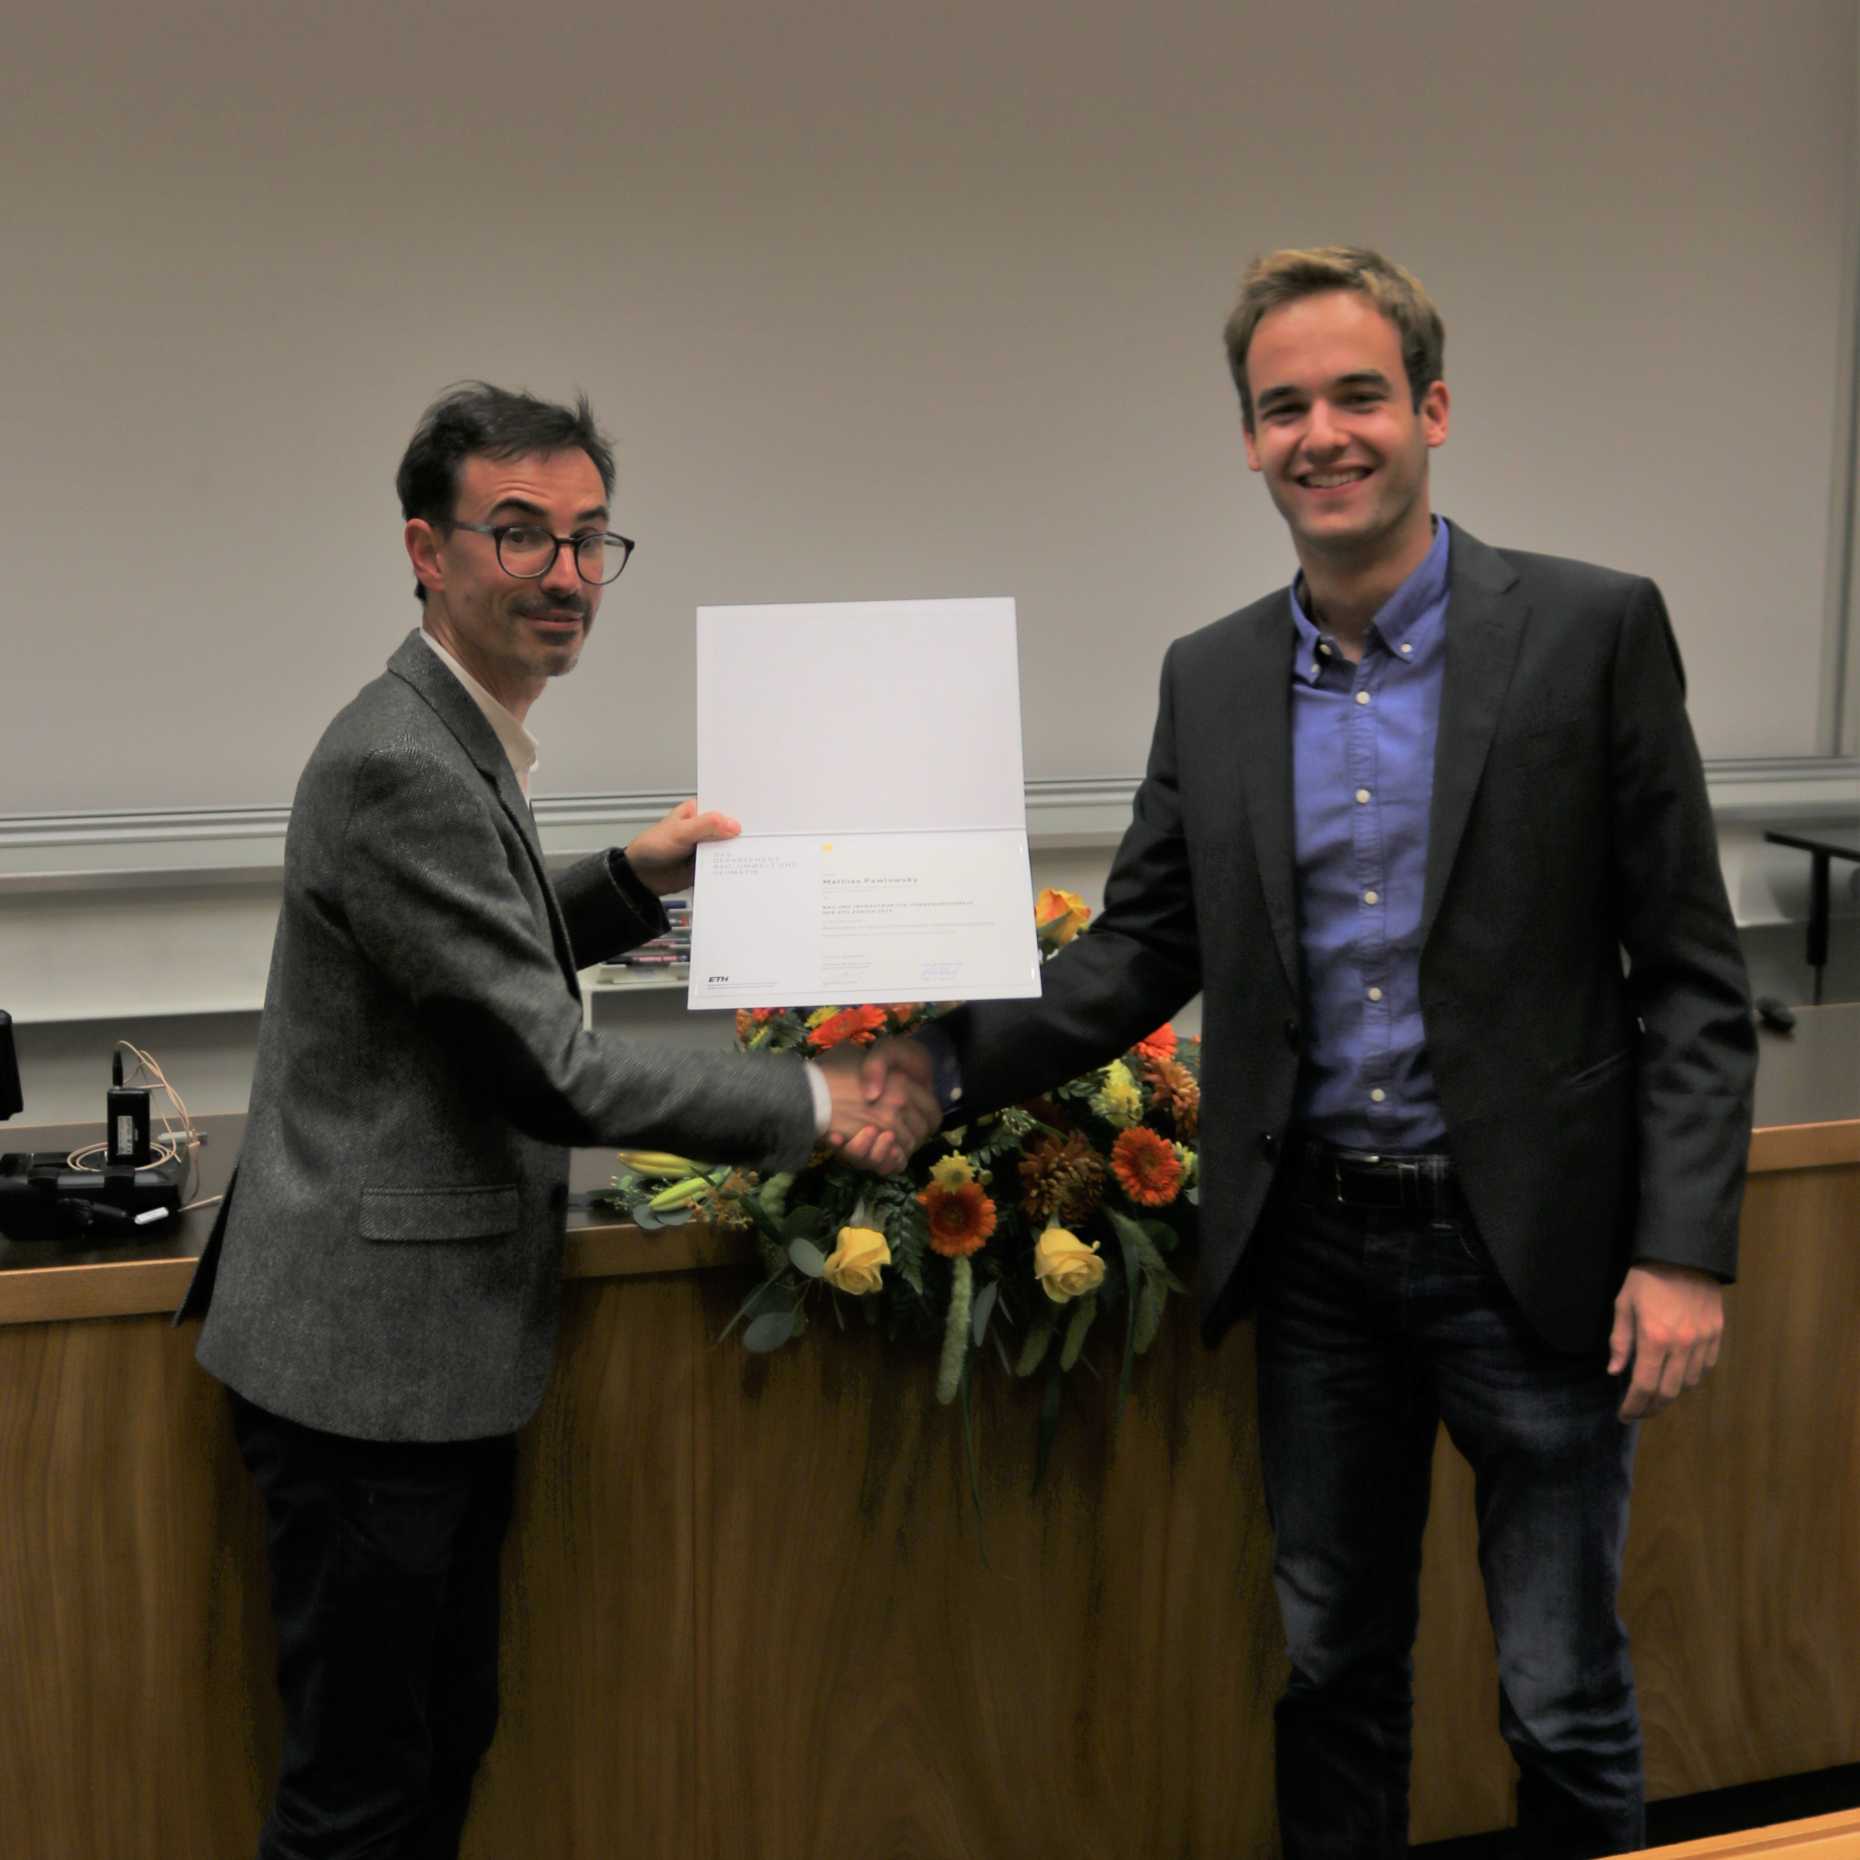 Verleihung des BI-Förderungspreises durch Prof. Habert an Mathias Pawlowsky